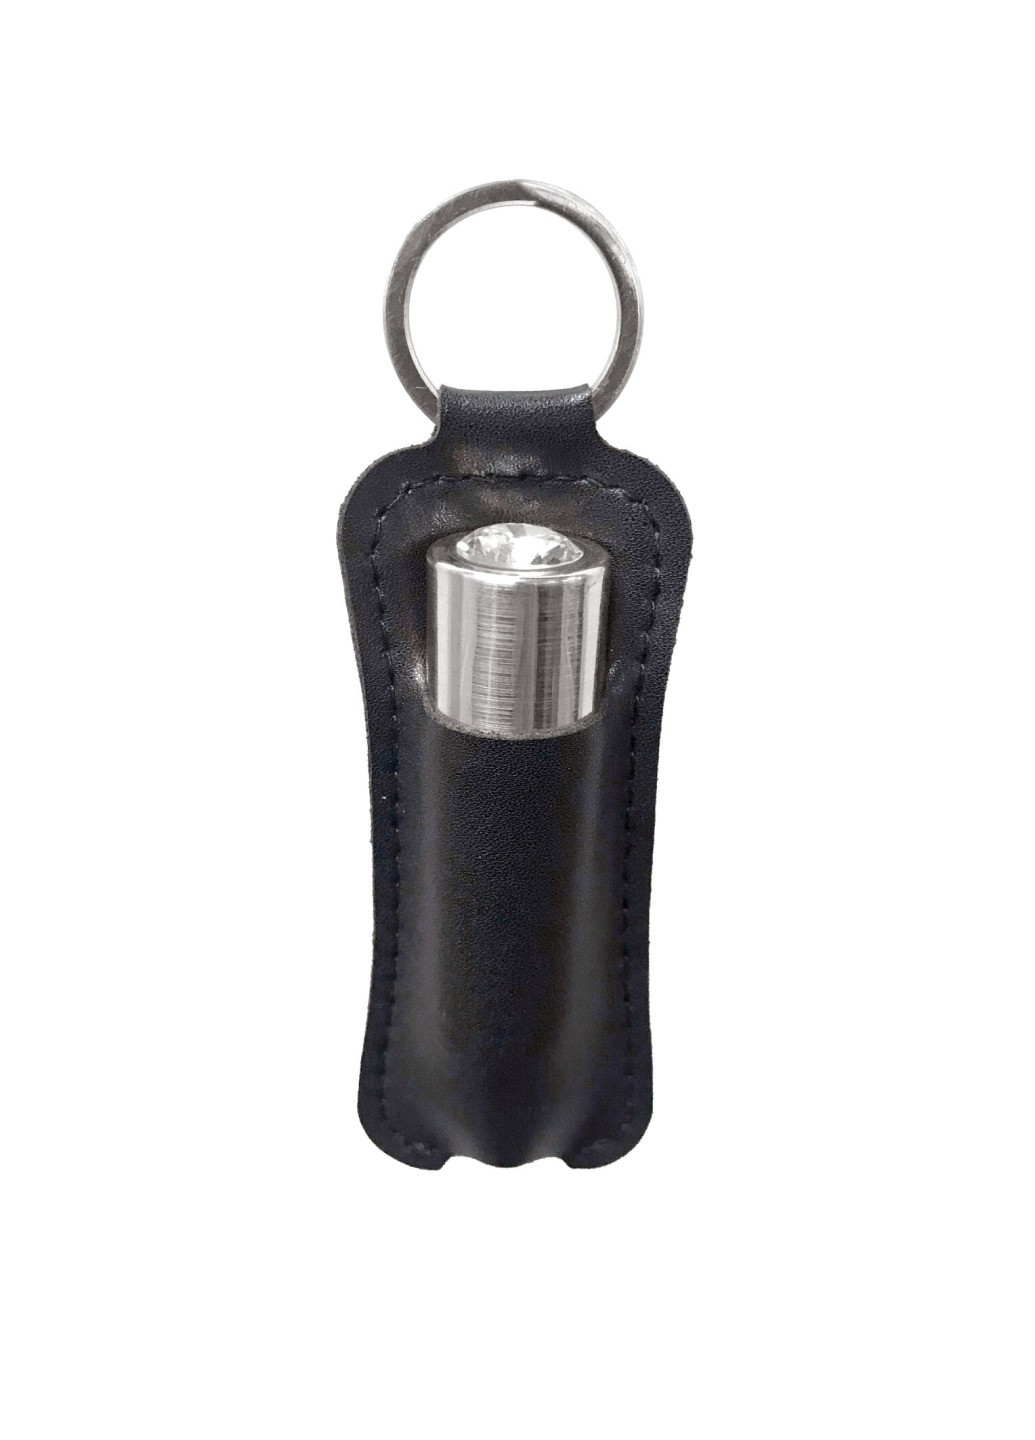 Вибропуля First-Class Bullet 2.5″ with Key Chain Pouch, Silver, 9 режимов вибрации PowerBullet (272615886)